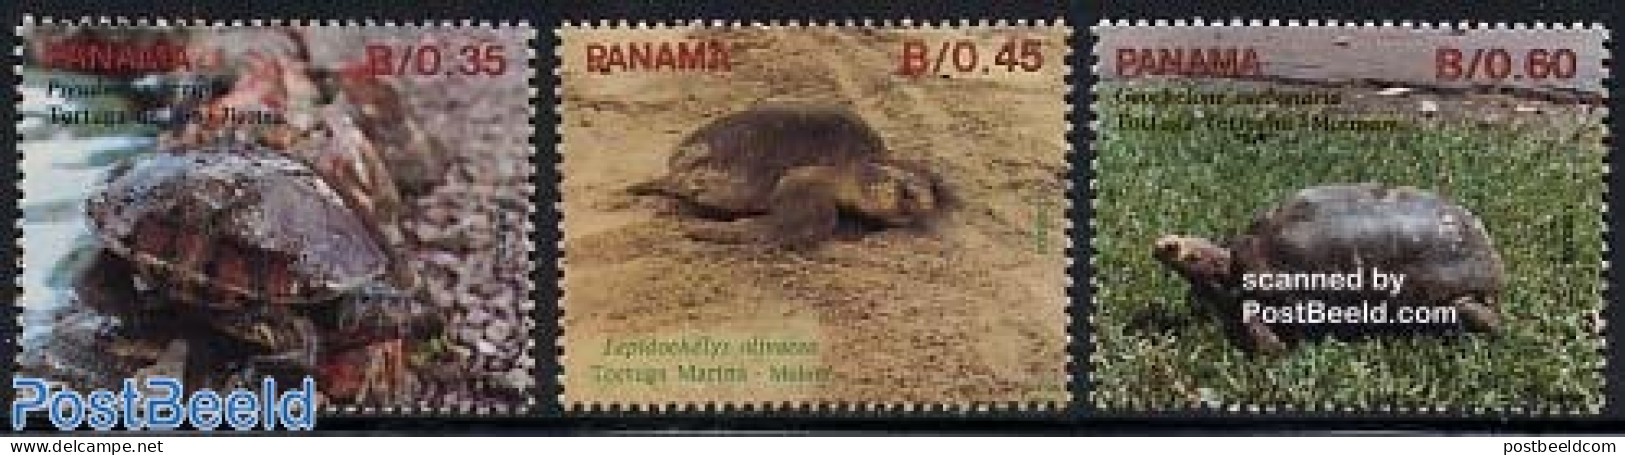 Panama 1990 Turtles 3v, Mint NH, Nature - Reptiles - Turtles - Panama